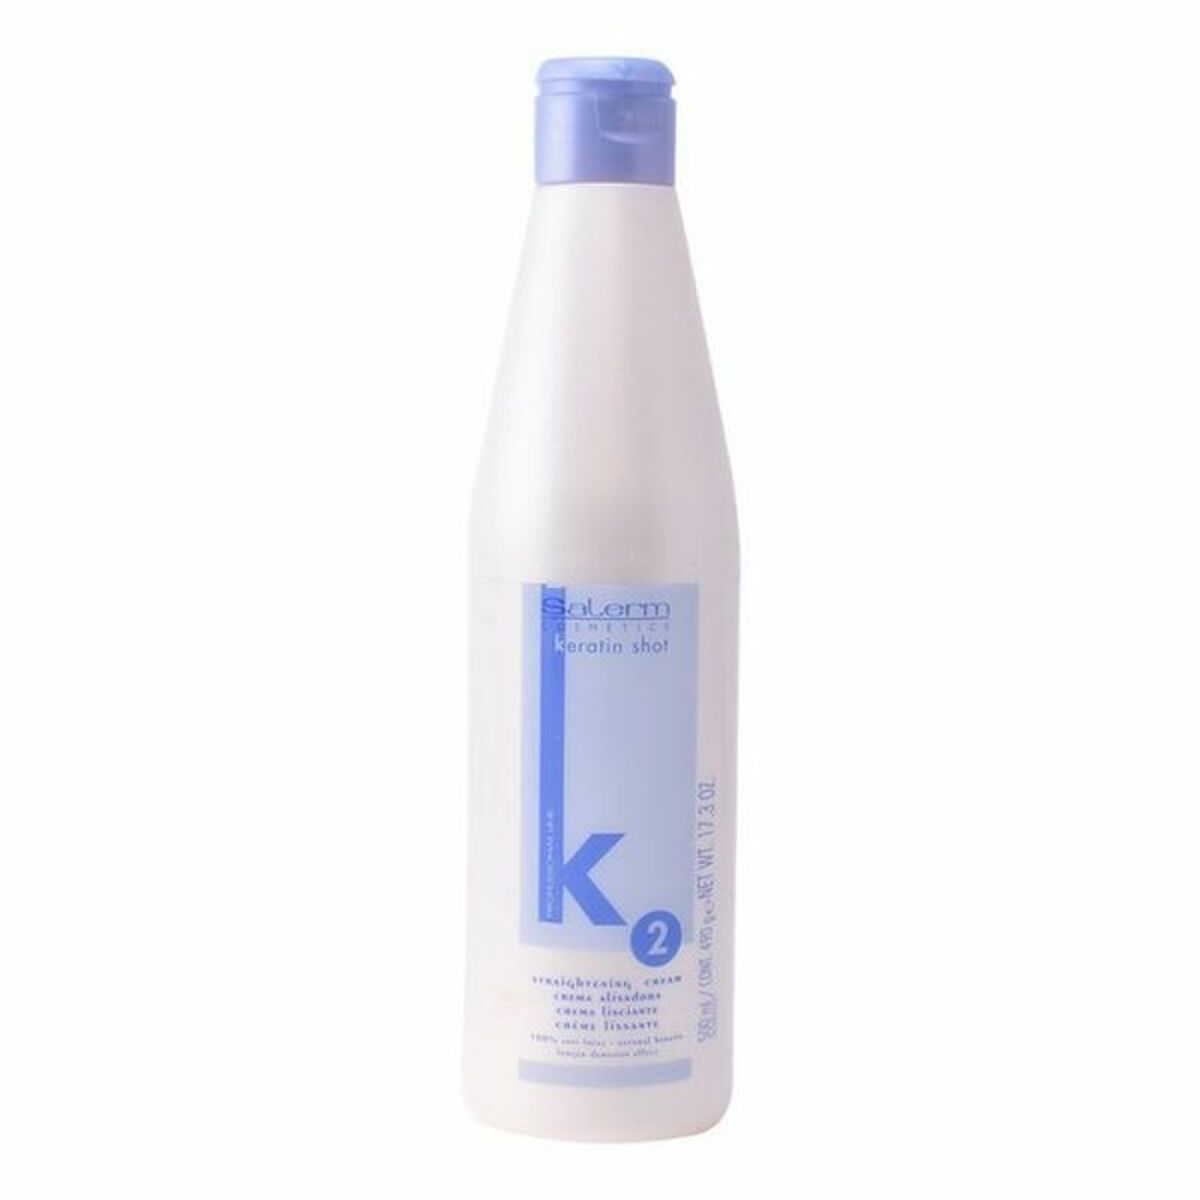 Hair Straightening Cream Keratin Shot Salerm Keratin Shot (500 ml) 500 ml - Calm Beauty IE